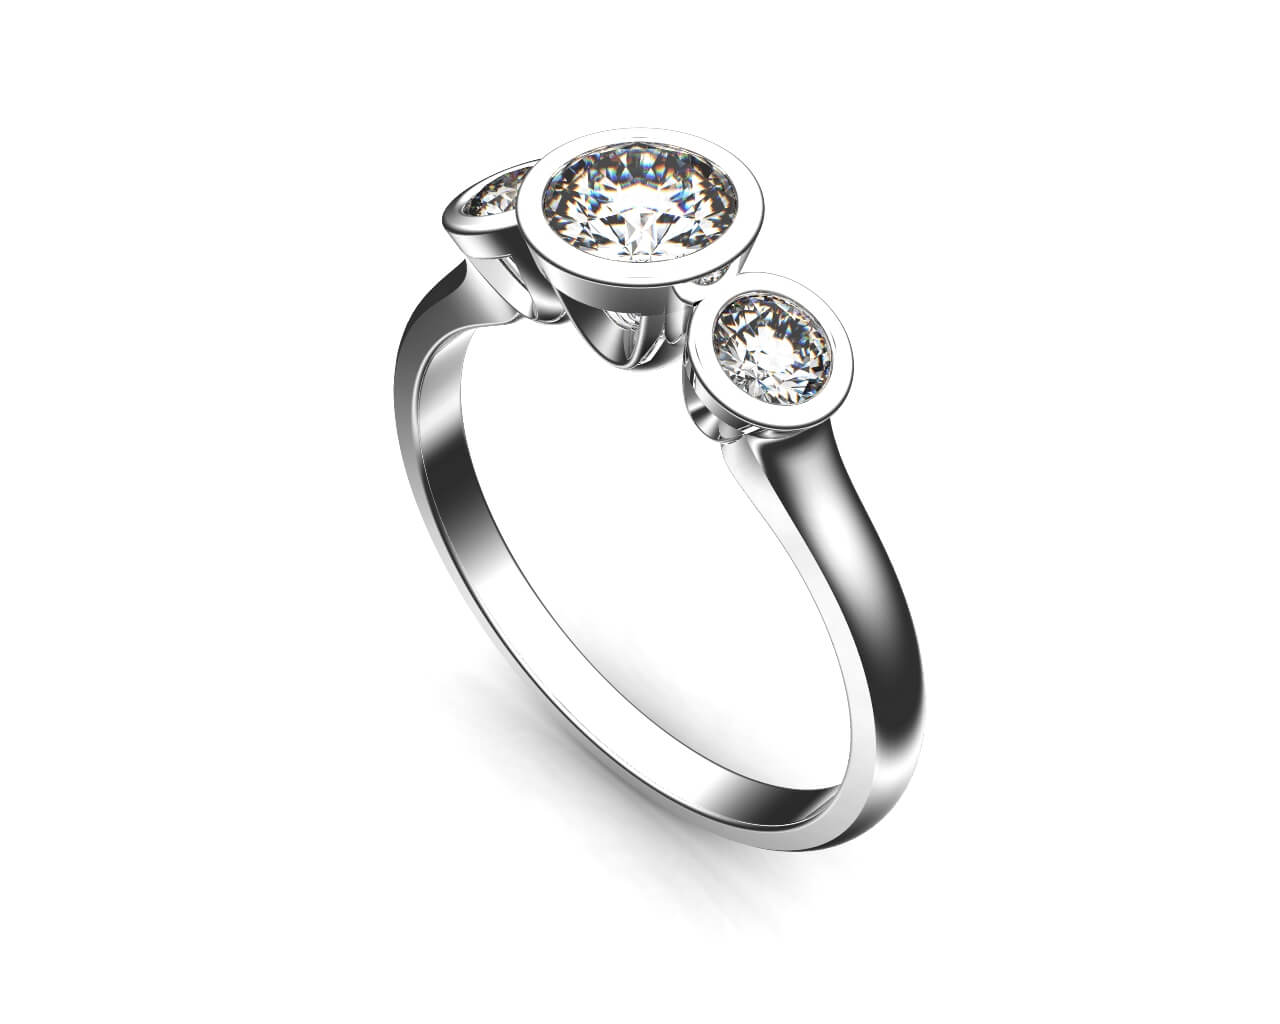 Round Brilliant Cut Diamond Trilogy Engagement Ring, Bezel Set Stones on a Thin Plain Polished Band.